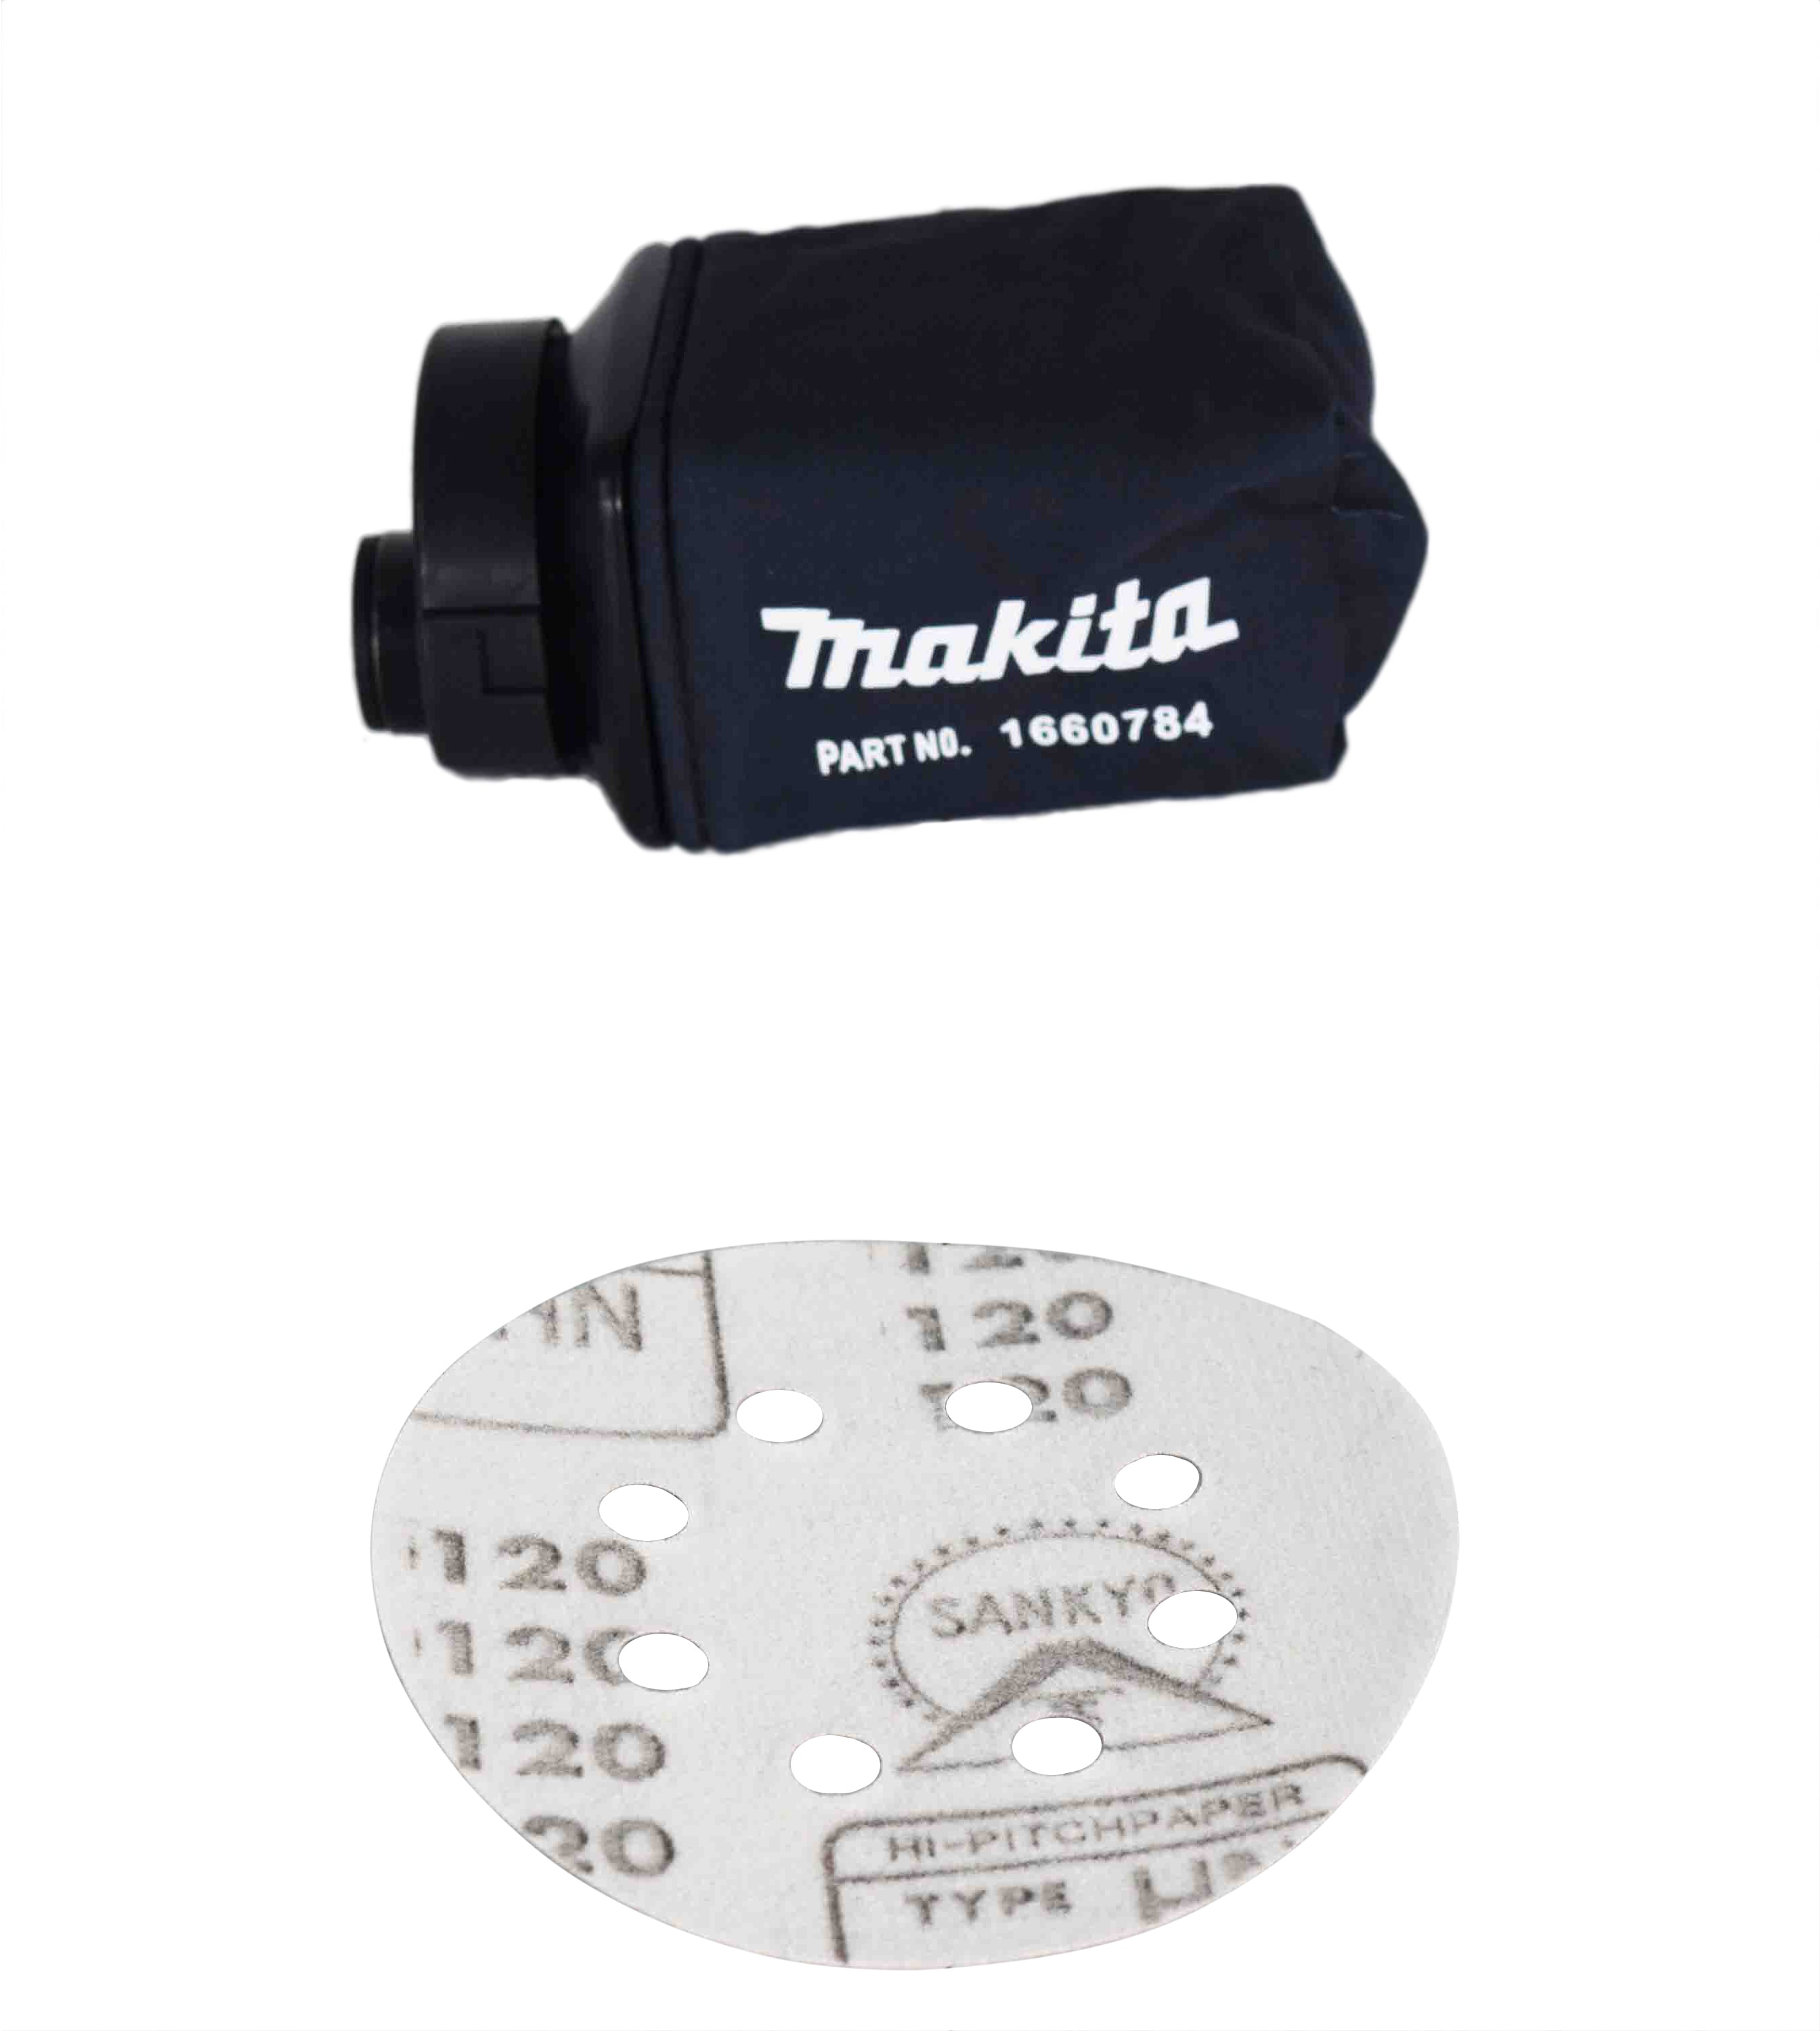 Makita XOB01Z 18V Lithium-Ion Cordless Palm Orbit Sander